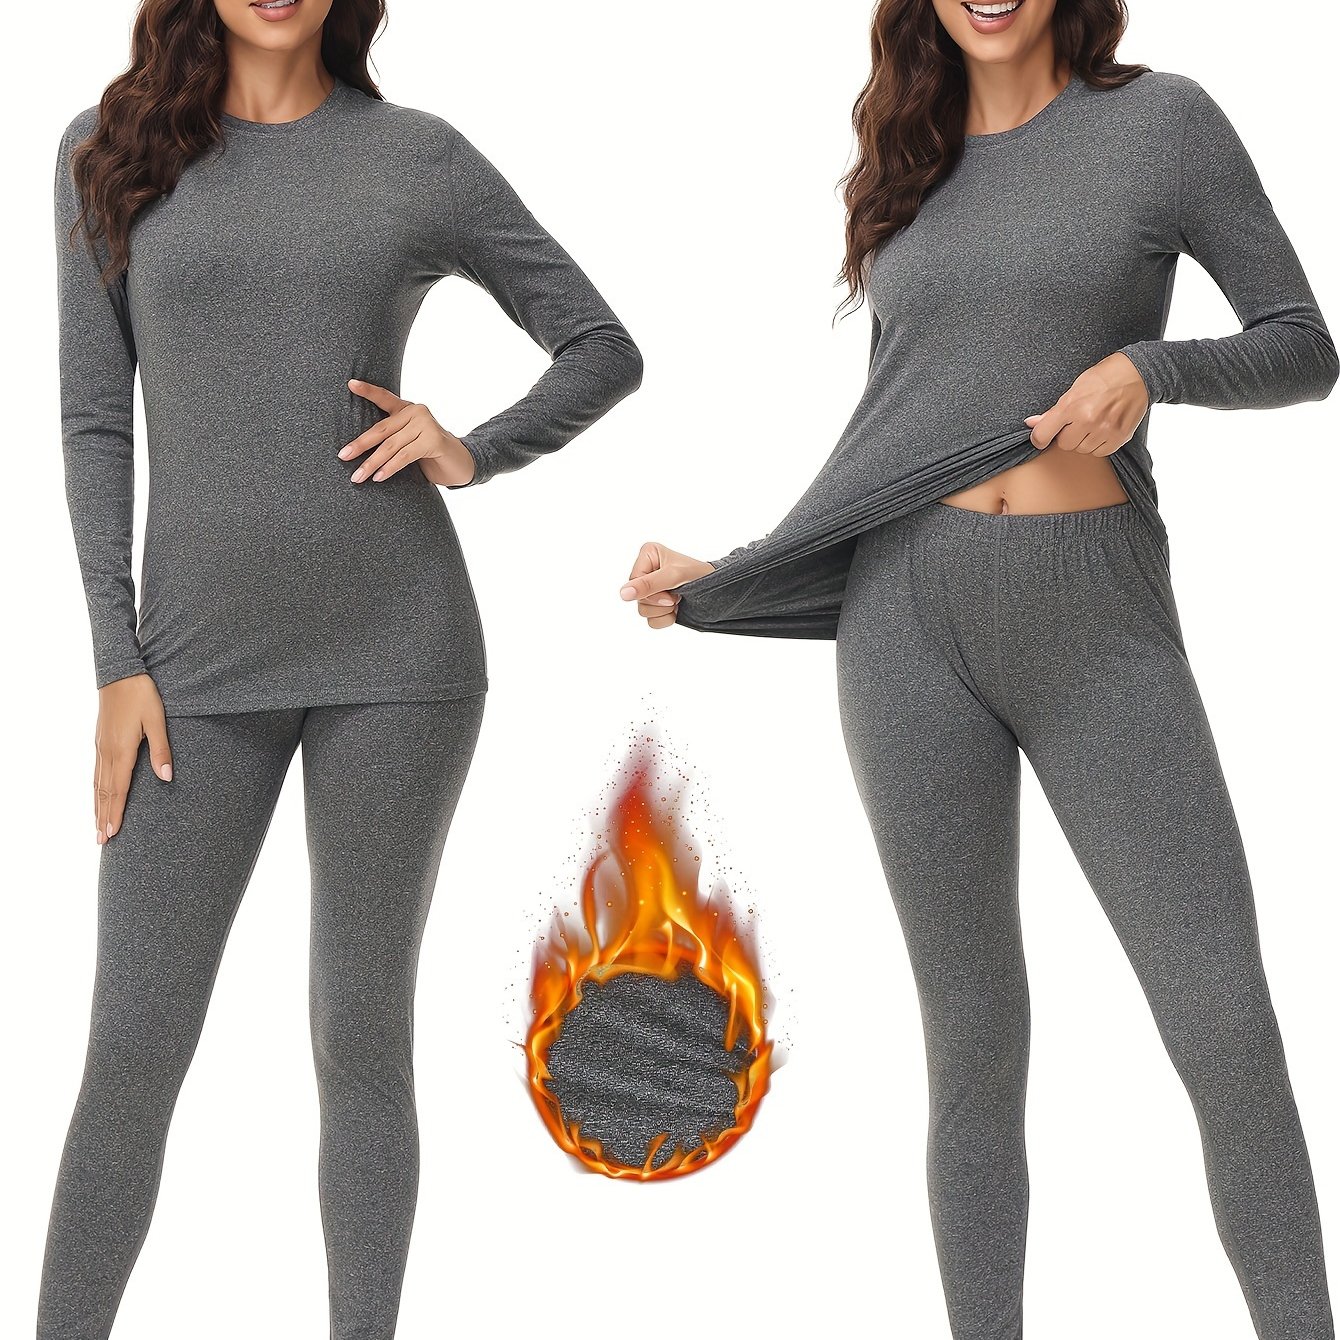 Women's thermal underwear